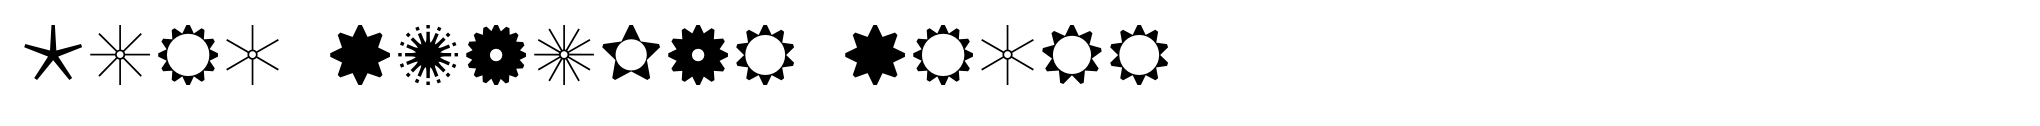 Acta Symbols Stars image